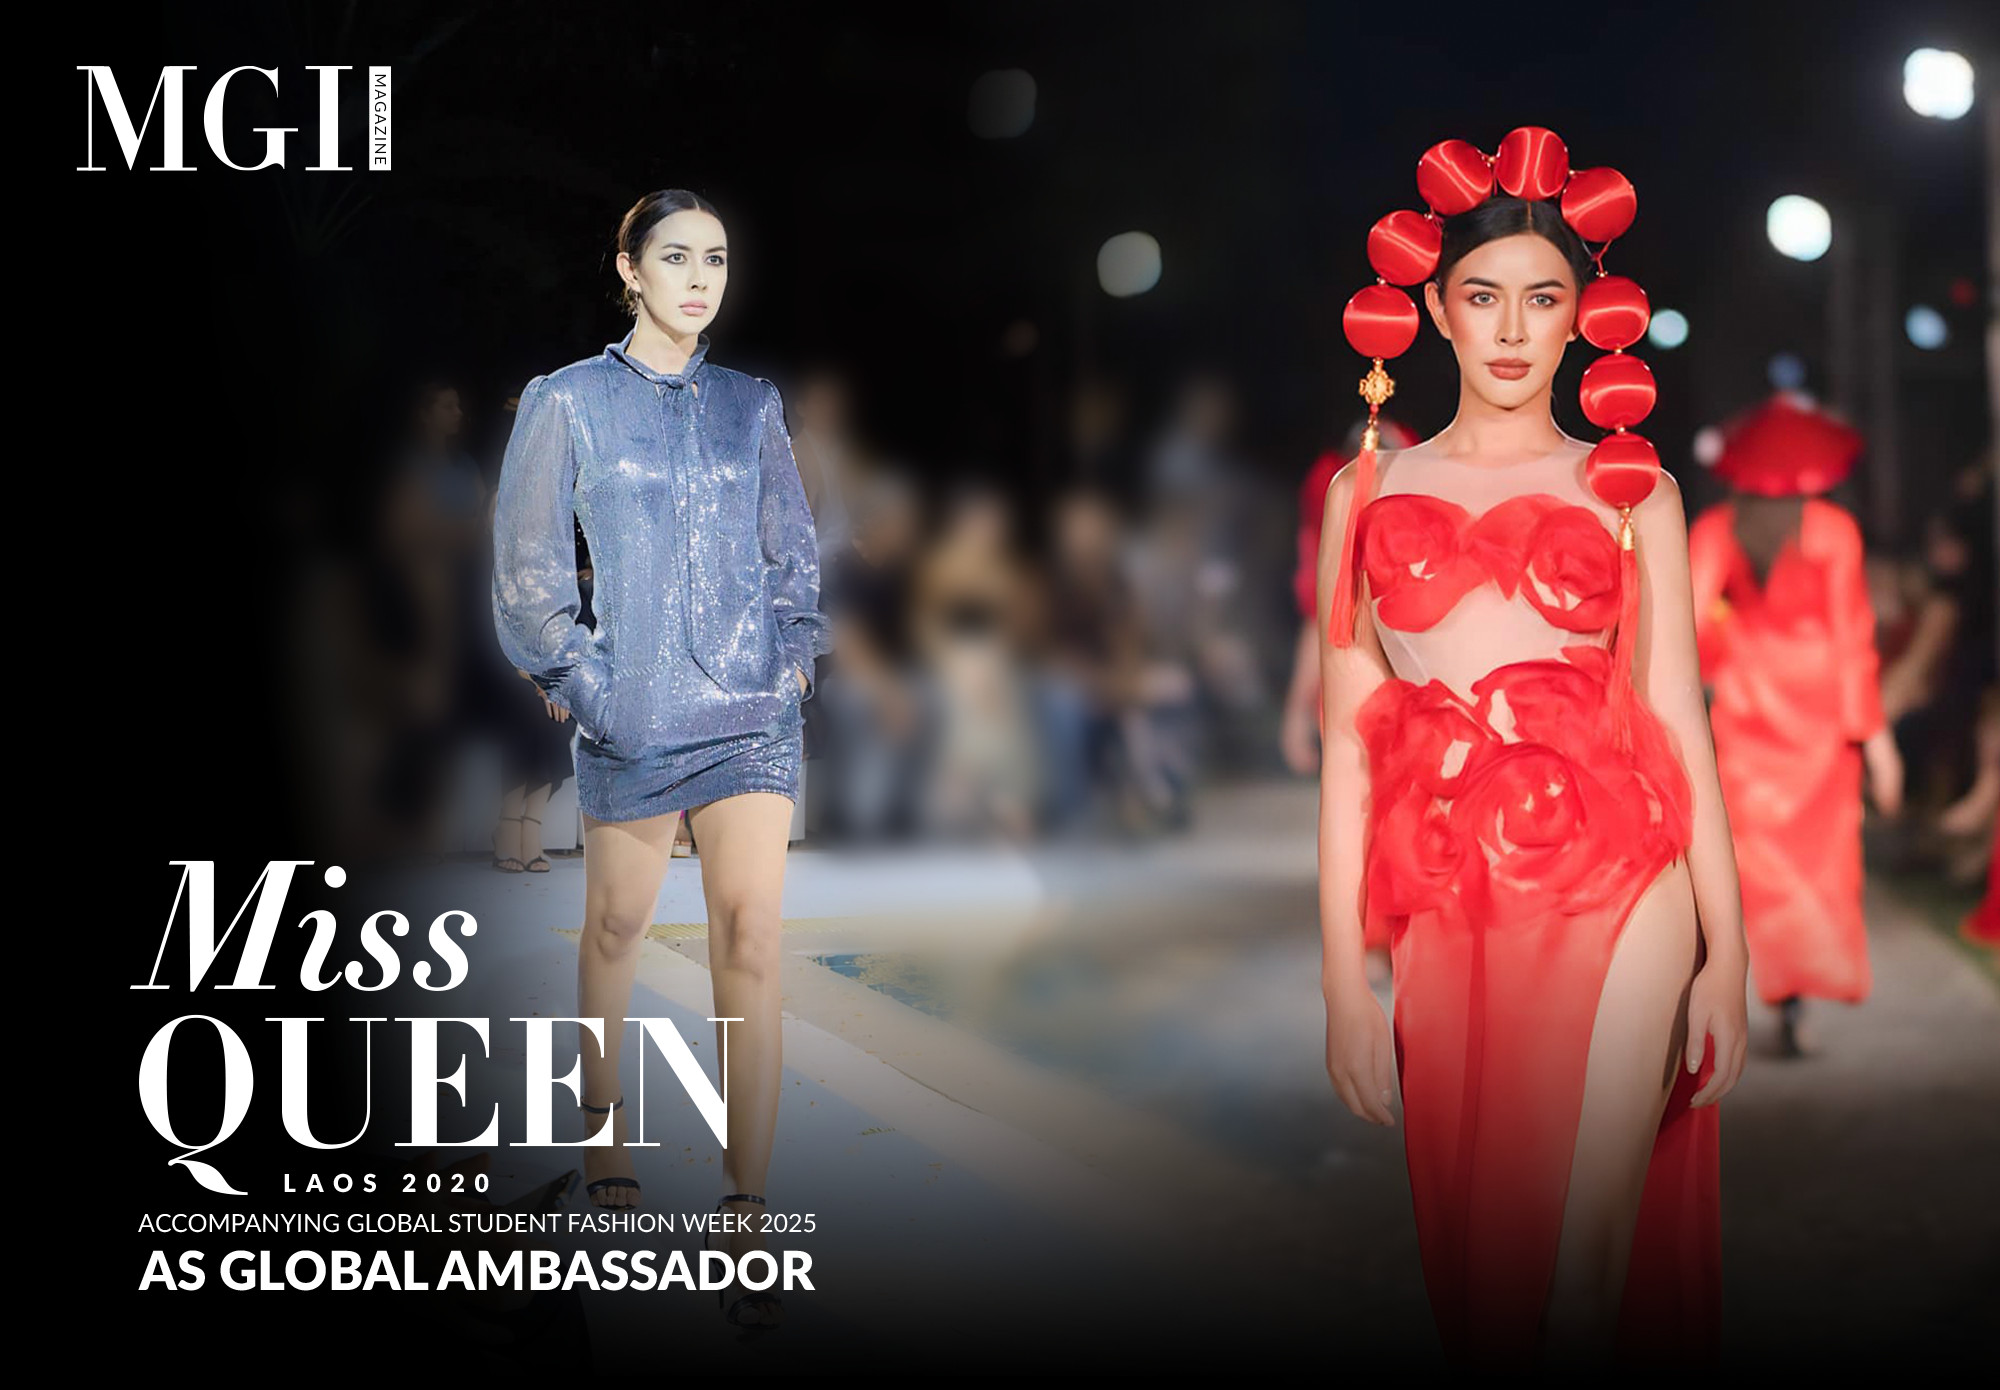 Miss Queen Laos 2020 accompanying Global Student Fashion Week 2025 as Global Ambassador